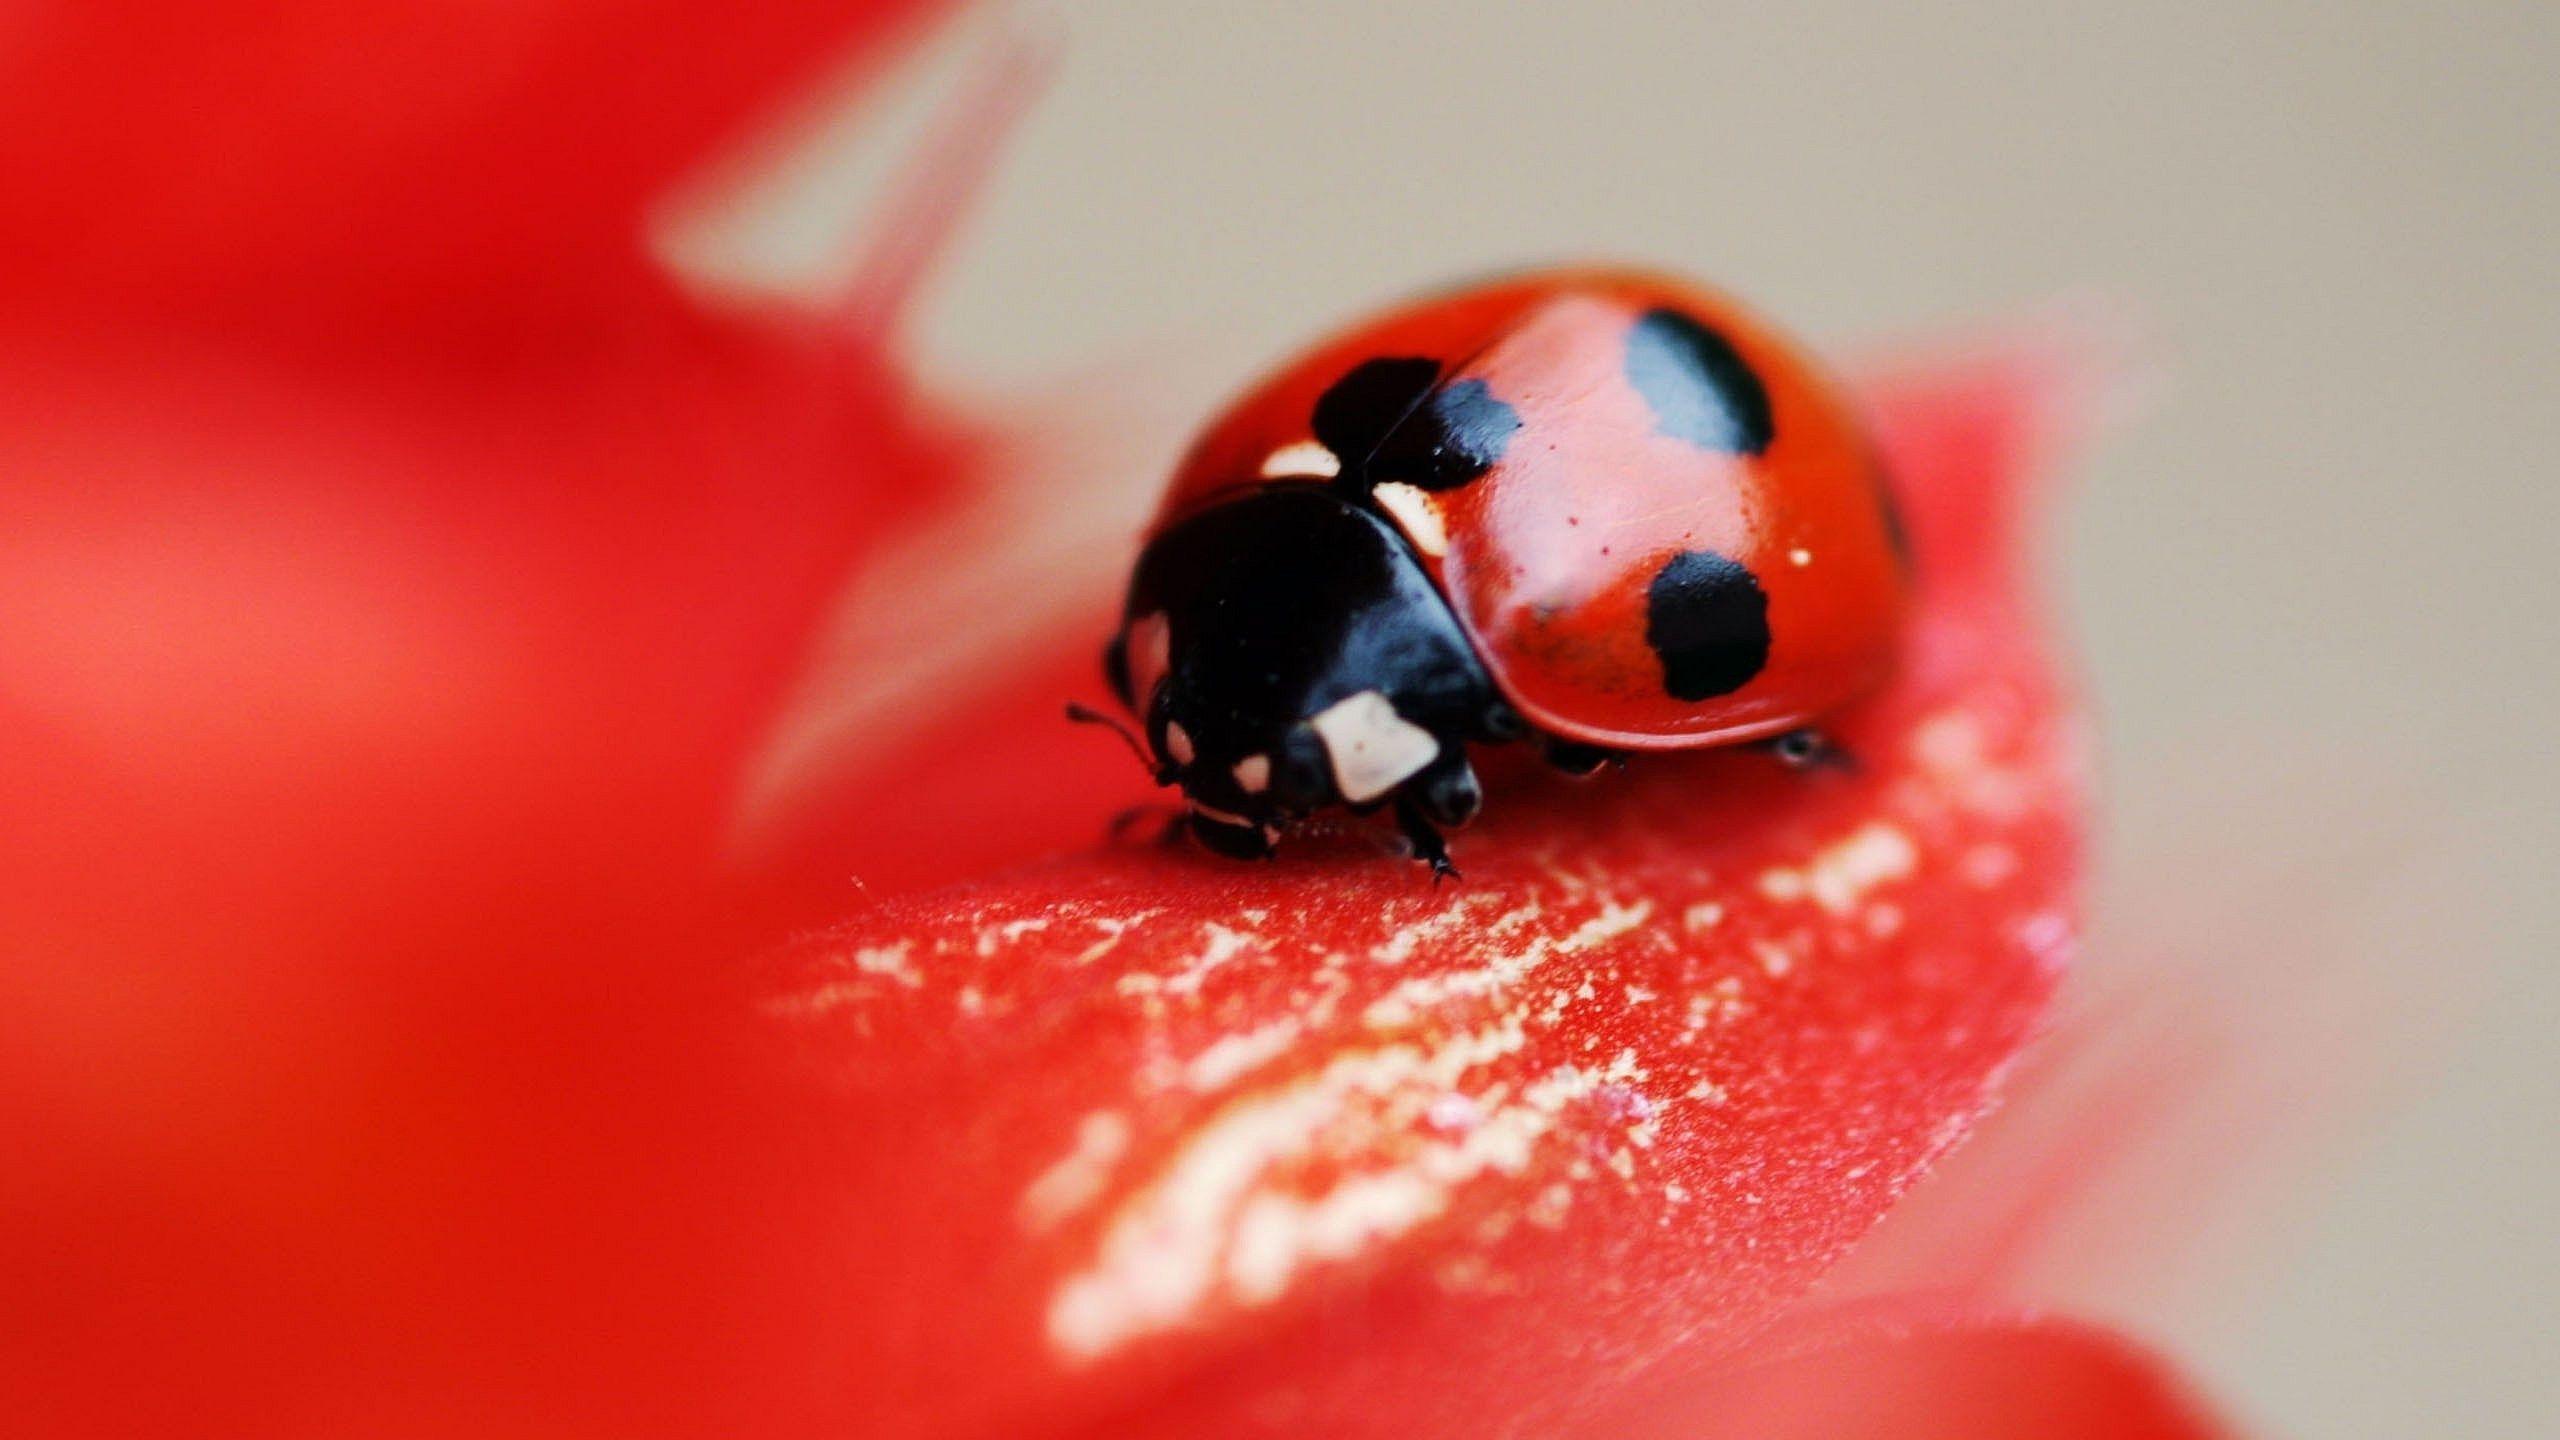 Fantastic Ladybug Wallpaper 43701 2560x1440 px